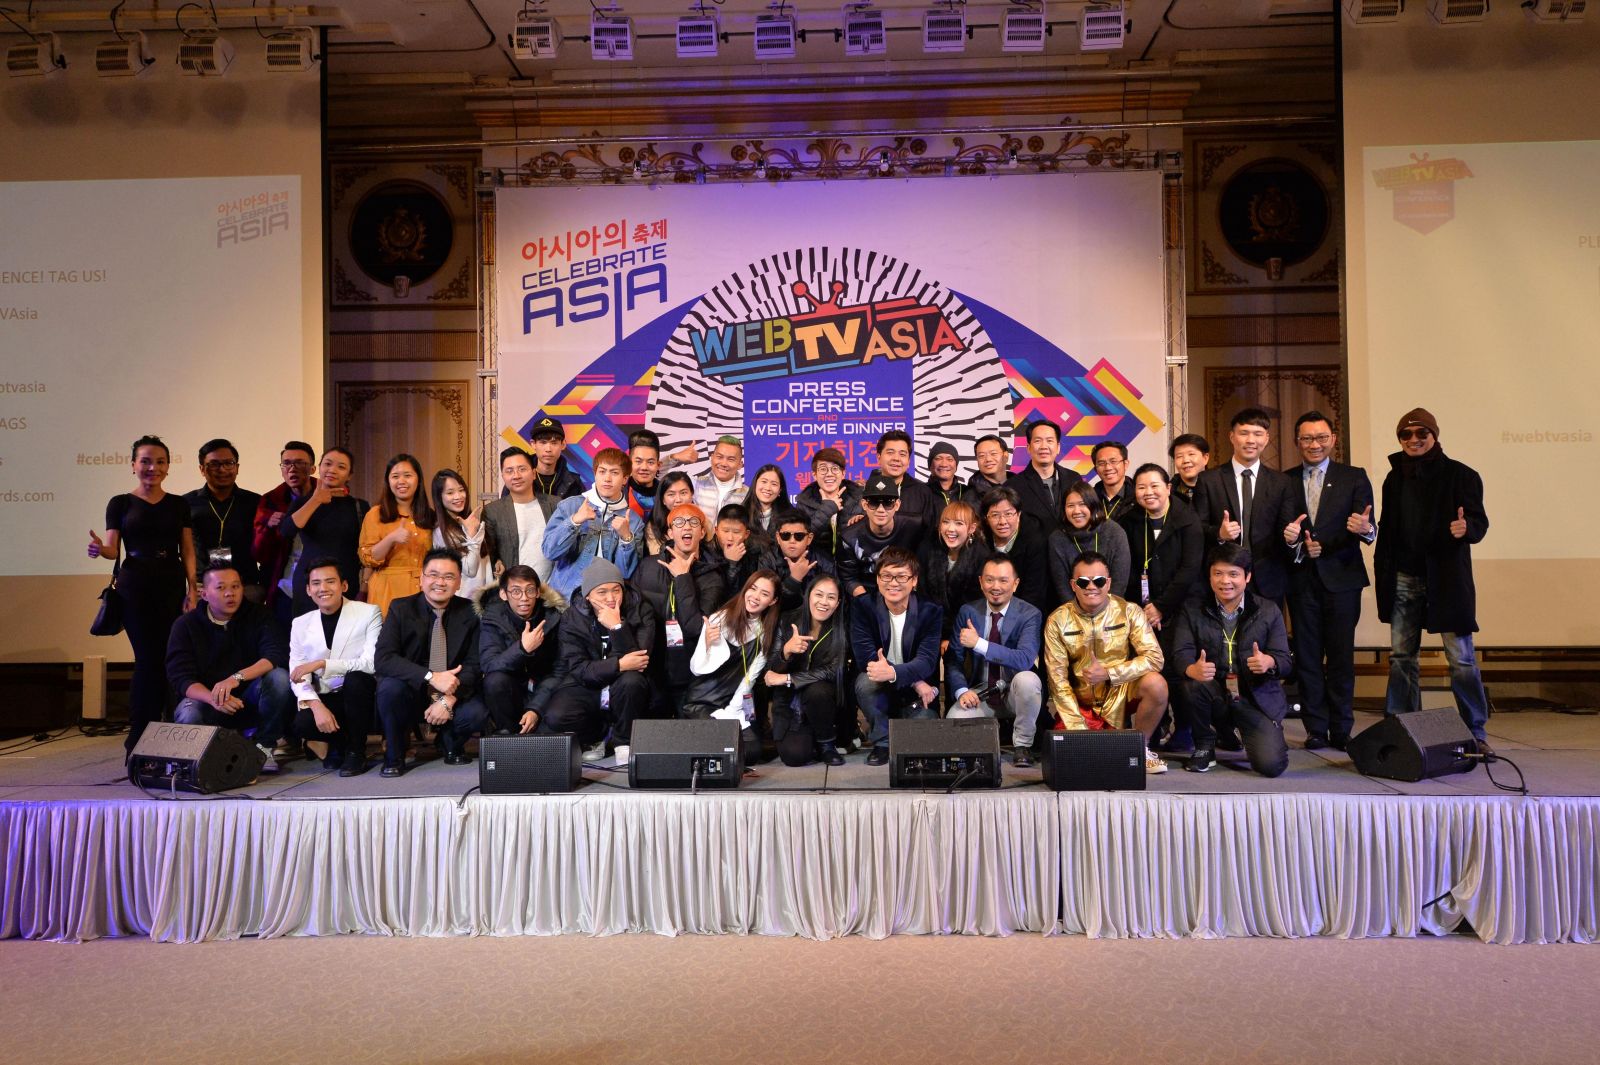 WebTVAsia: Swimming among the traditional media sharks